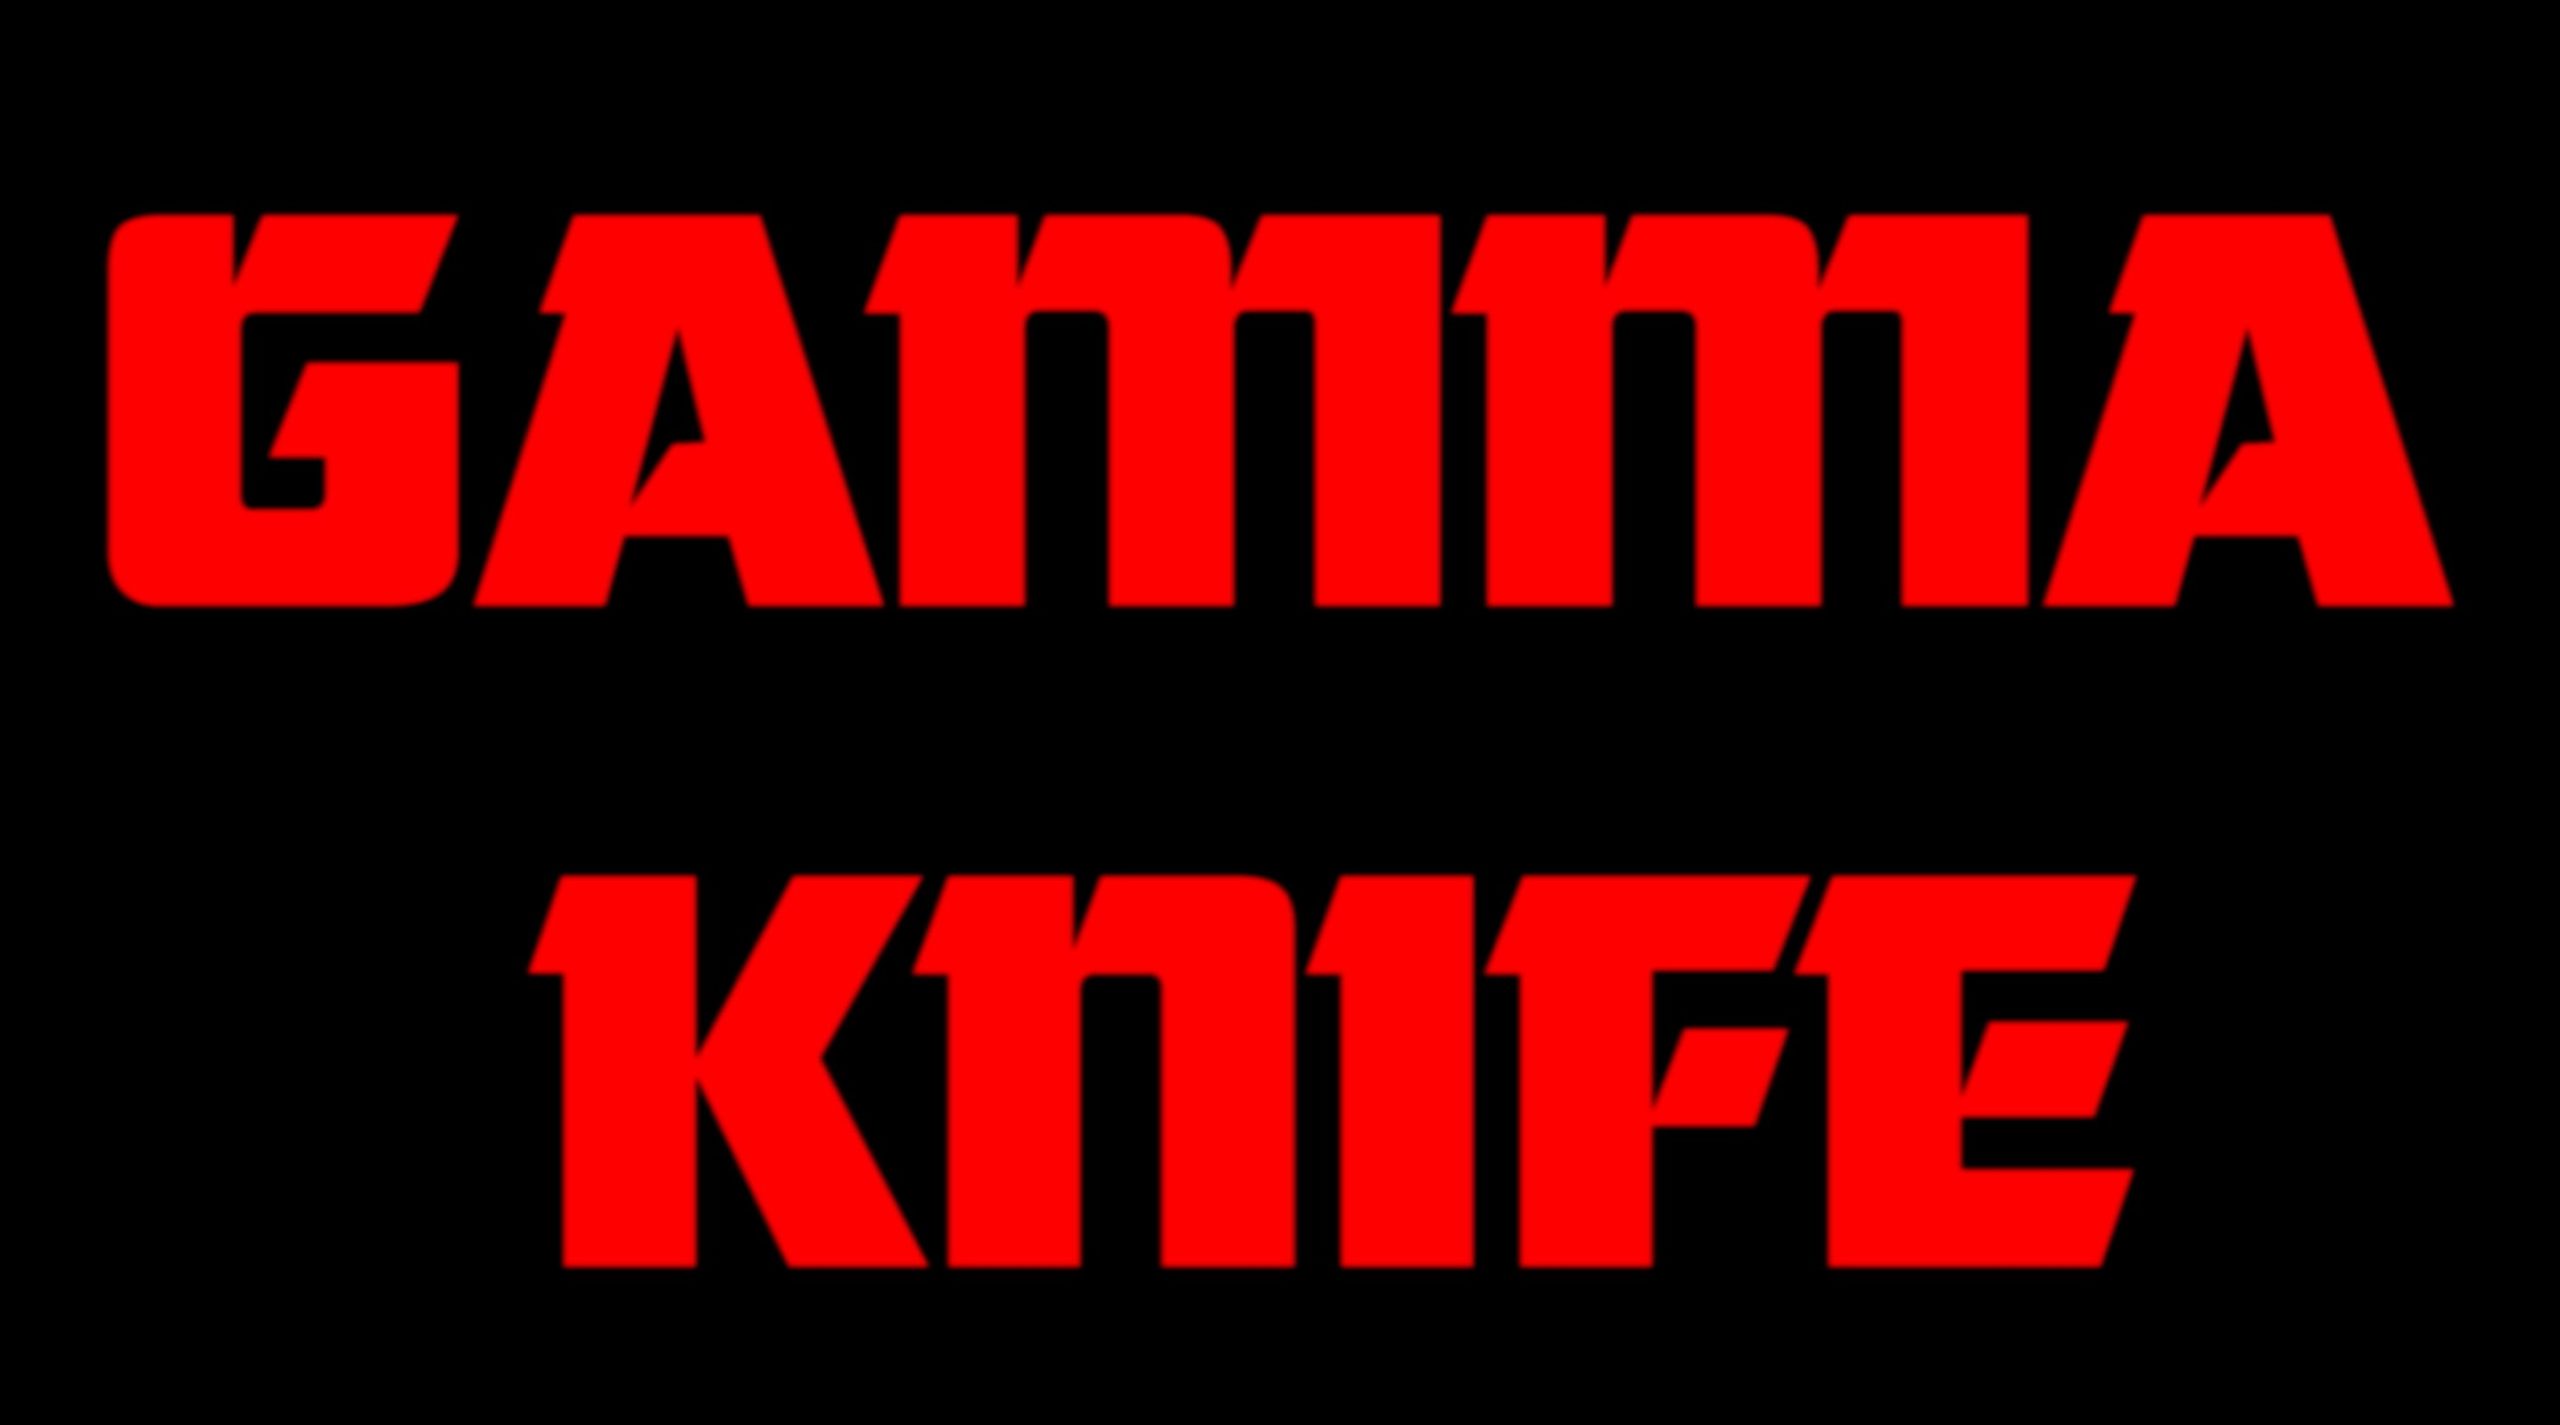 Gamma Knife